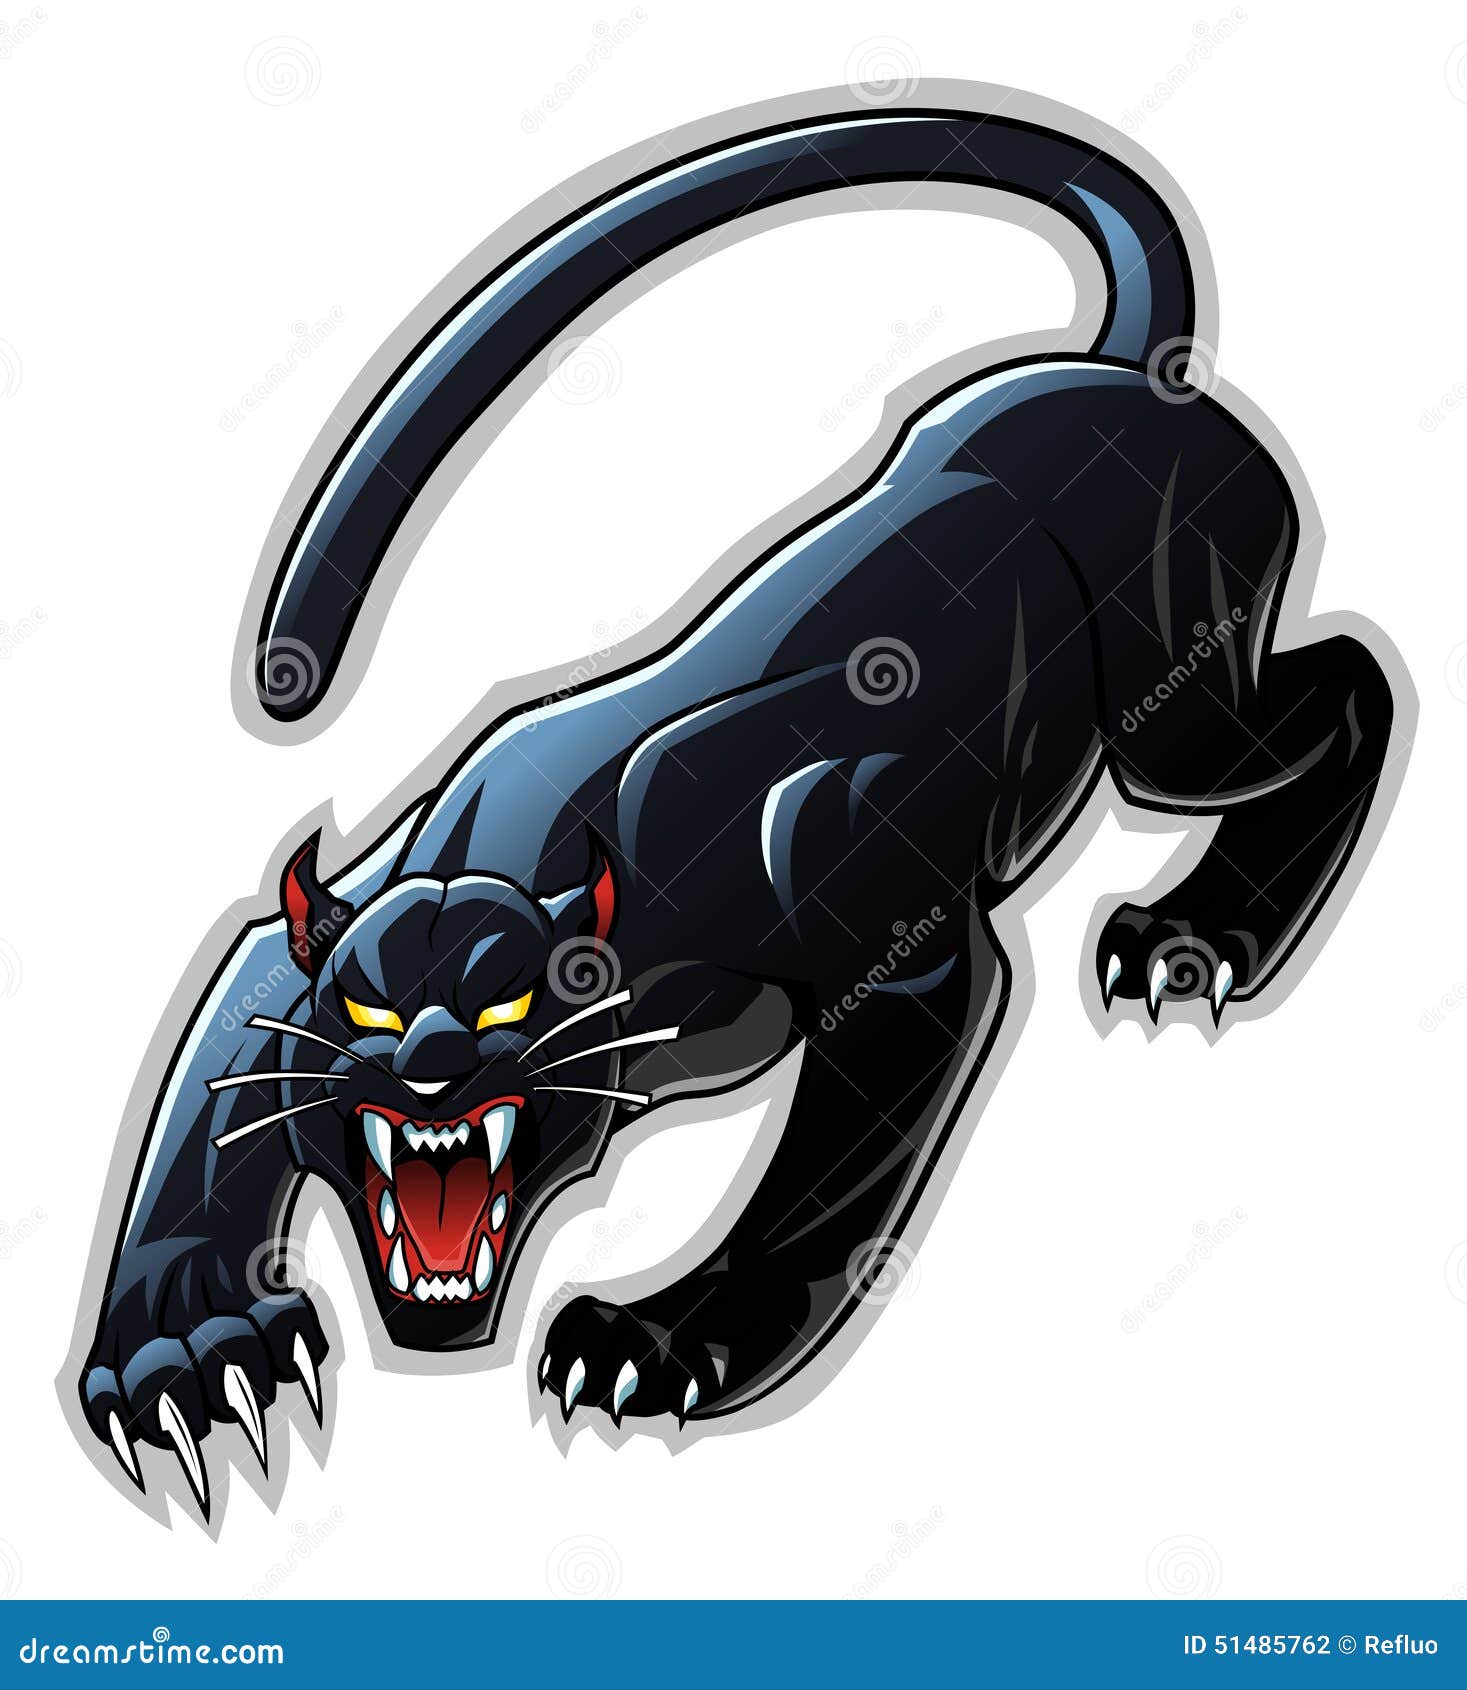 Panther mascot stock vector. Illustration of crazy, jaguar - 51485762